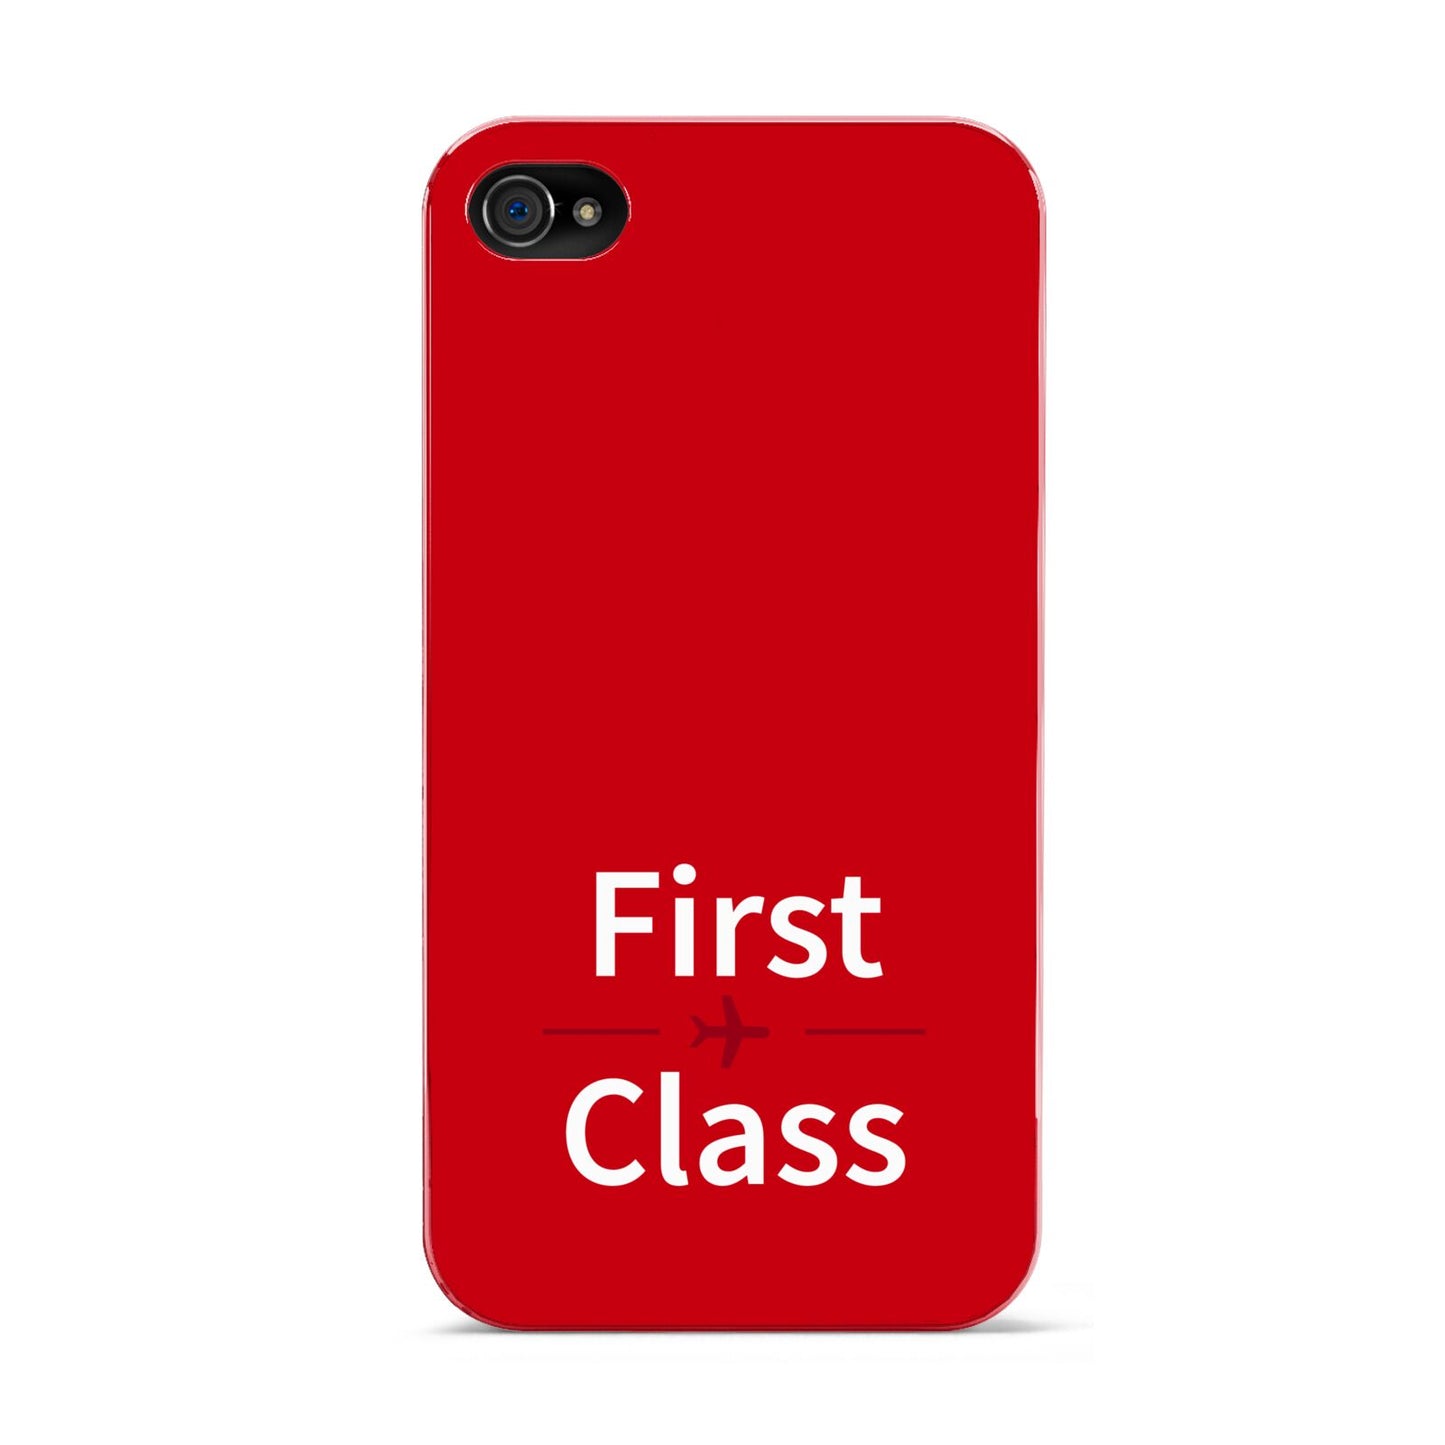 First Class Apple iPhone 4s Case